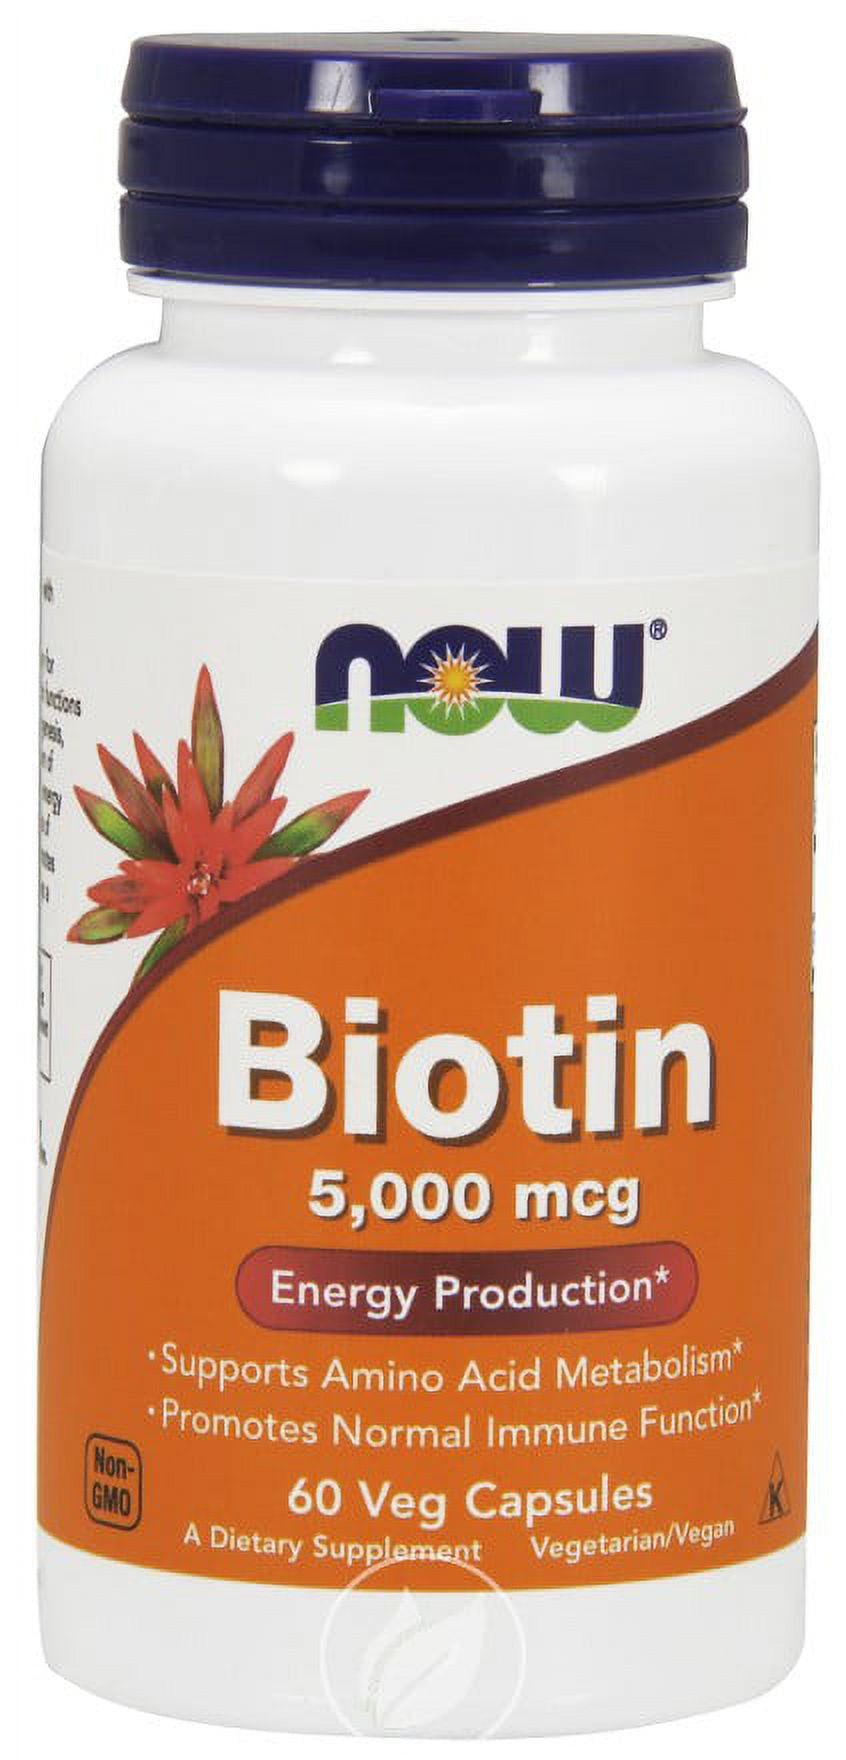 Biotin 60 Veg Caps by Now Foods, Pack of 2